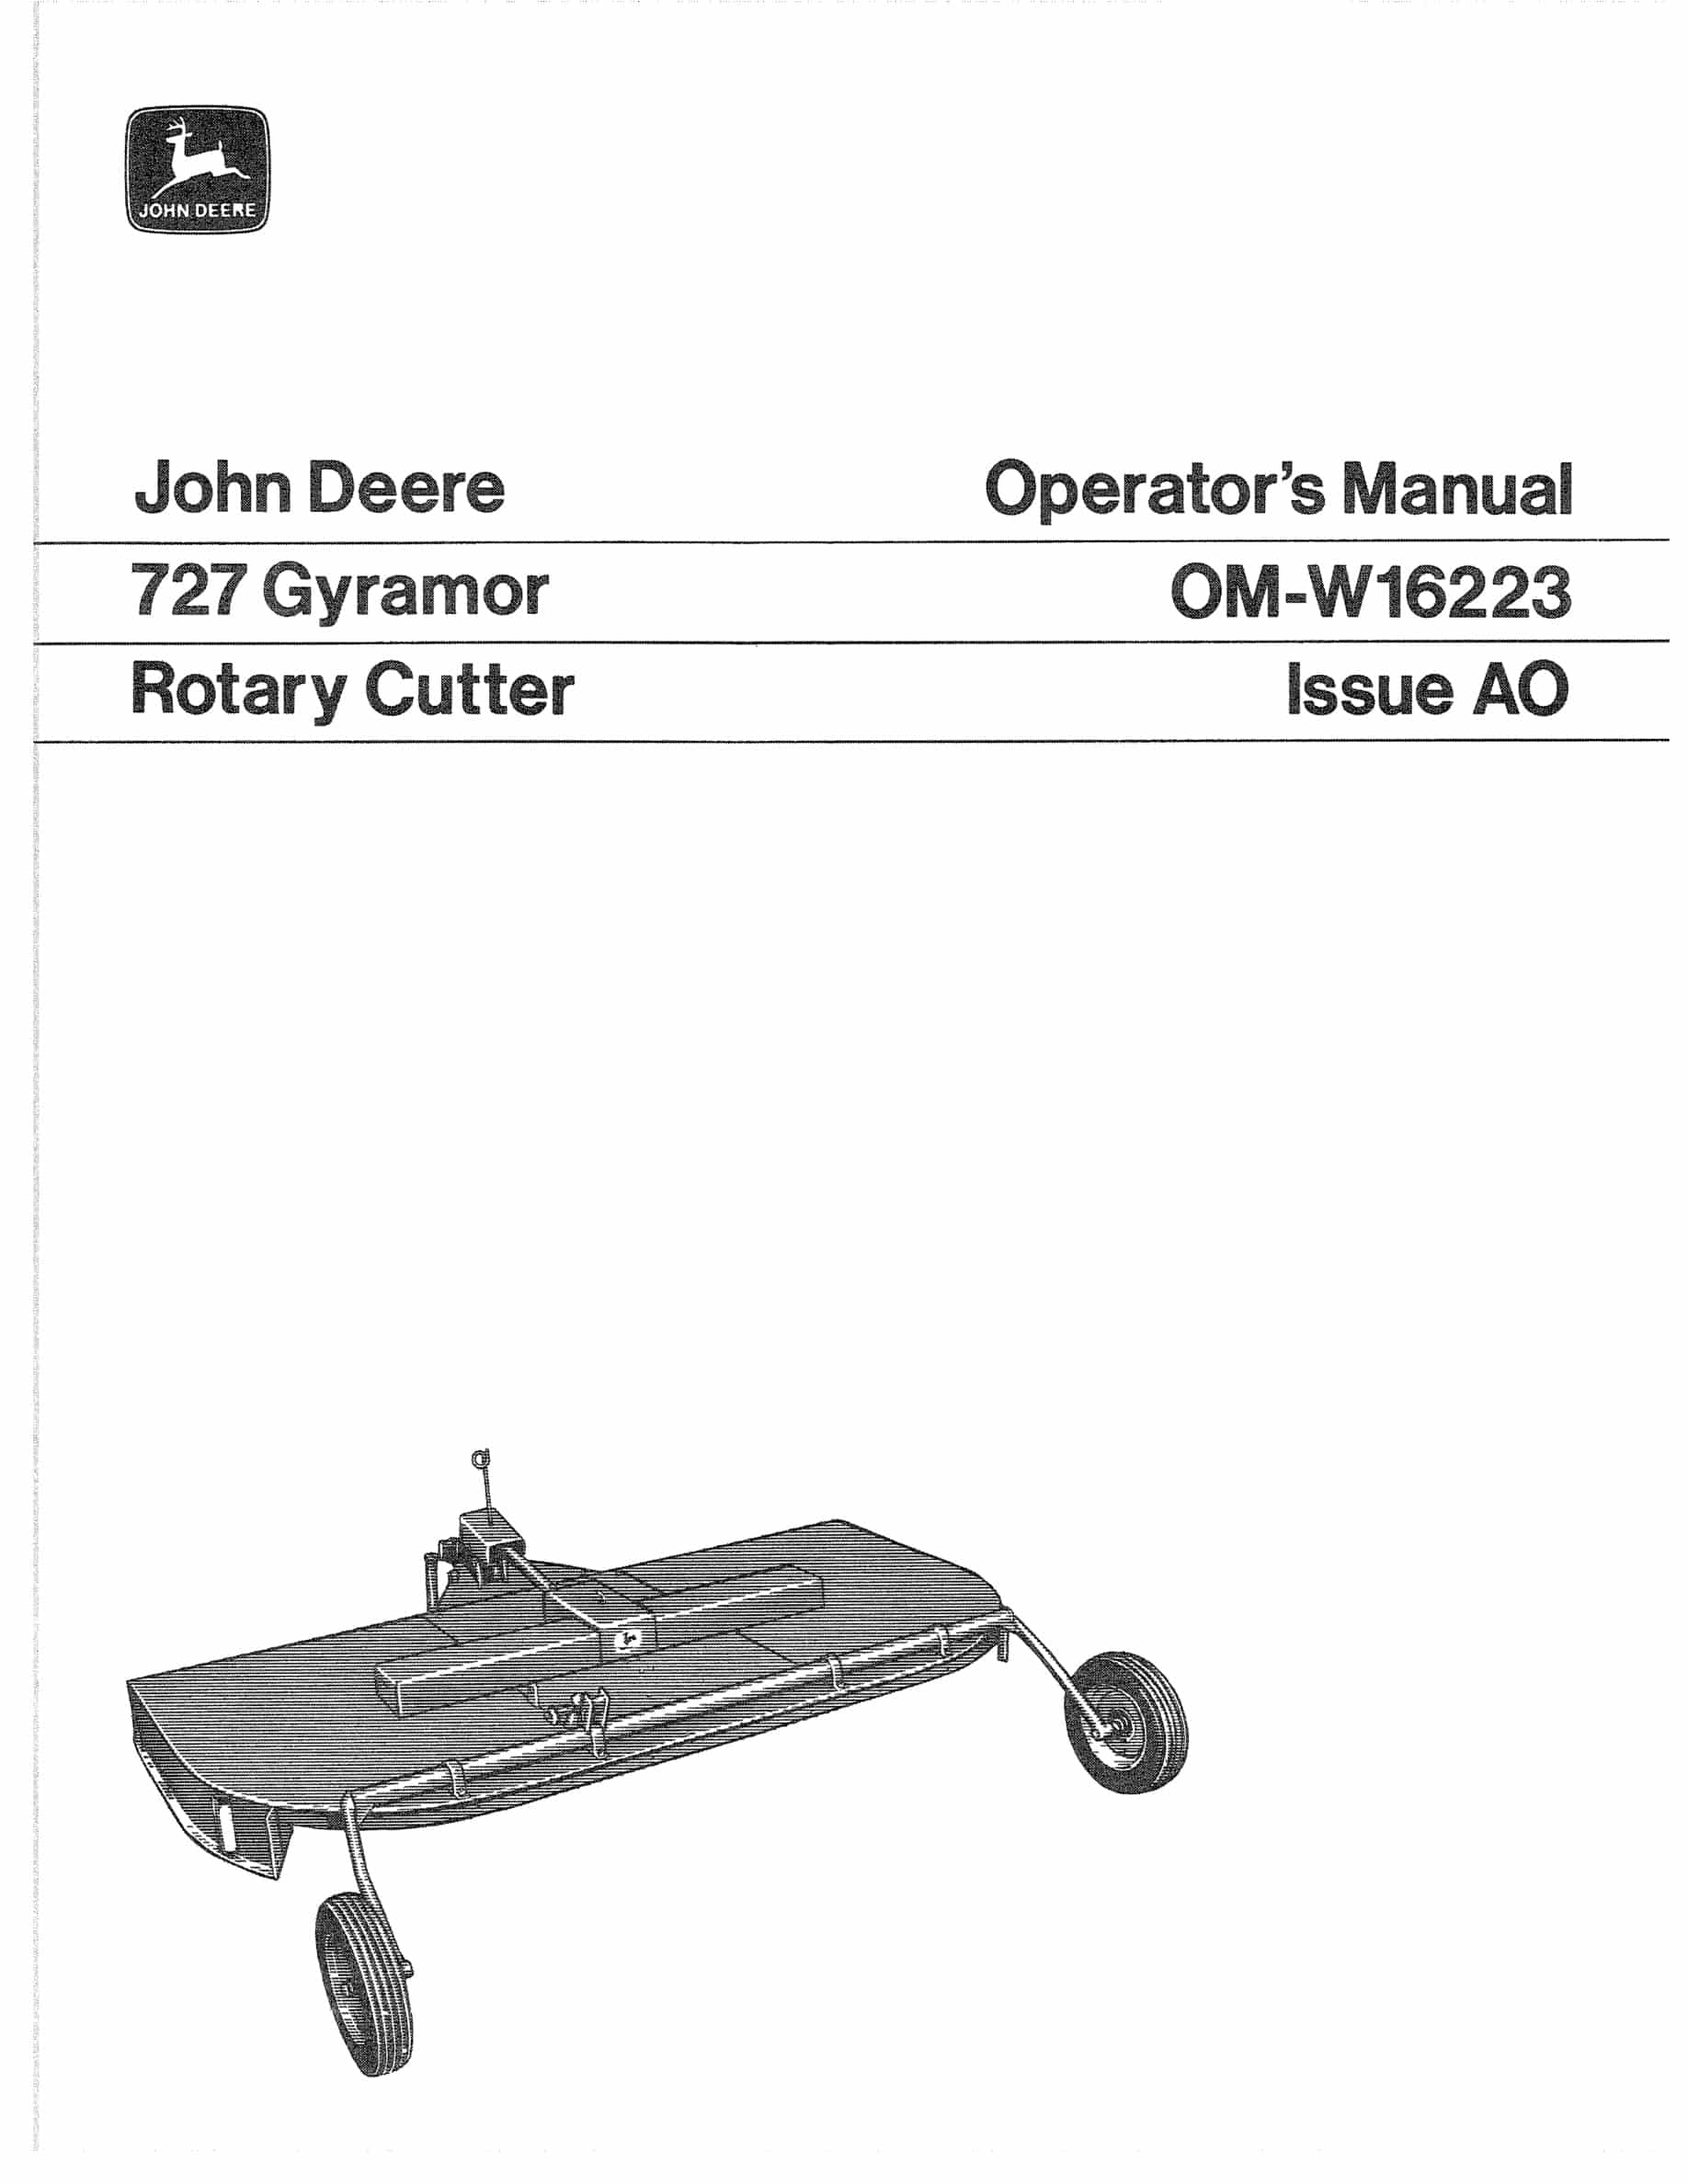 John Deere 727 Gyramor Rotary Cutter Operator Manual OMW16223-1